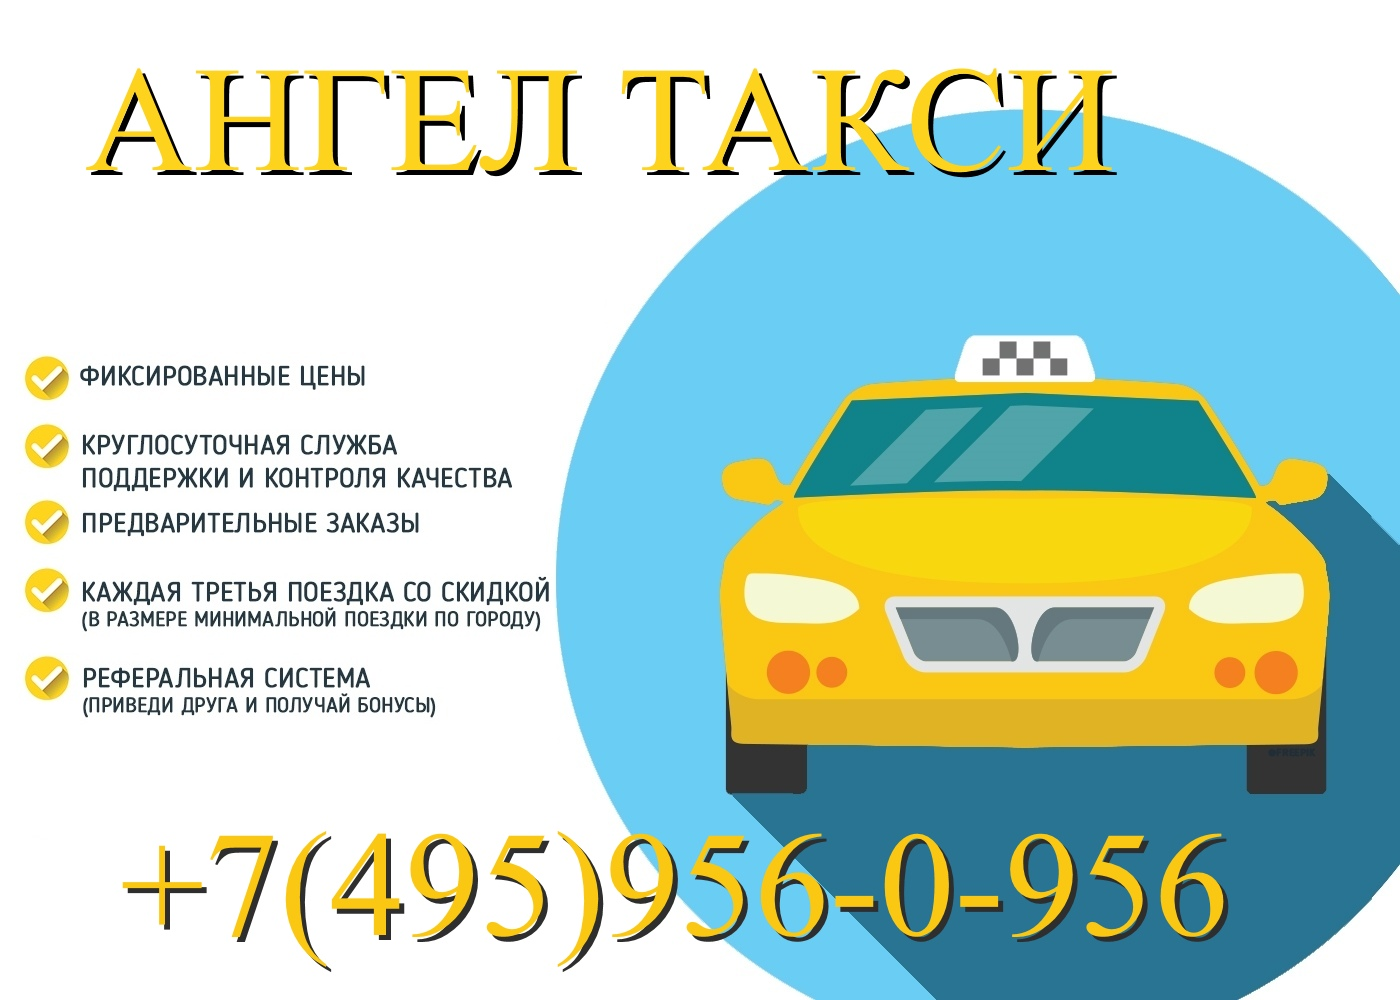 Номер телефона доставки такси